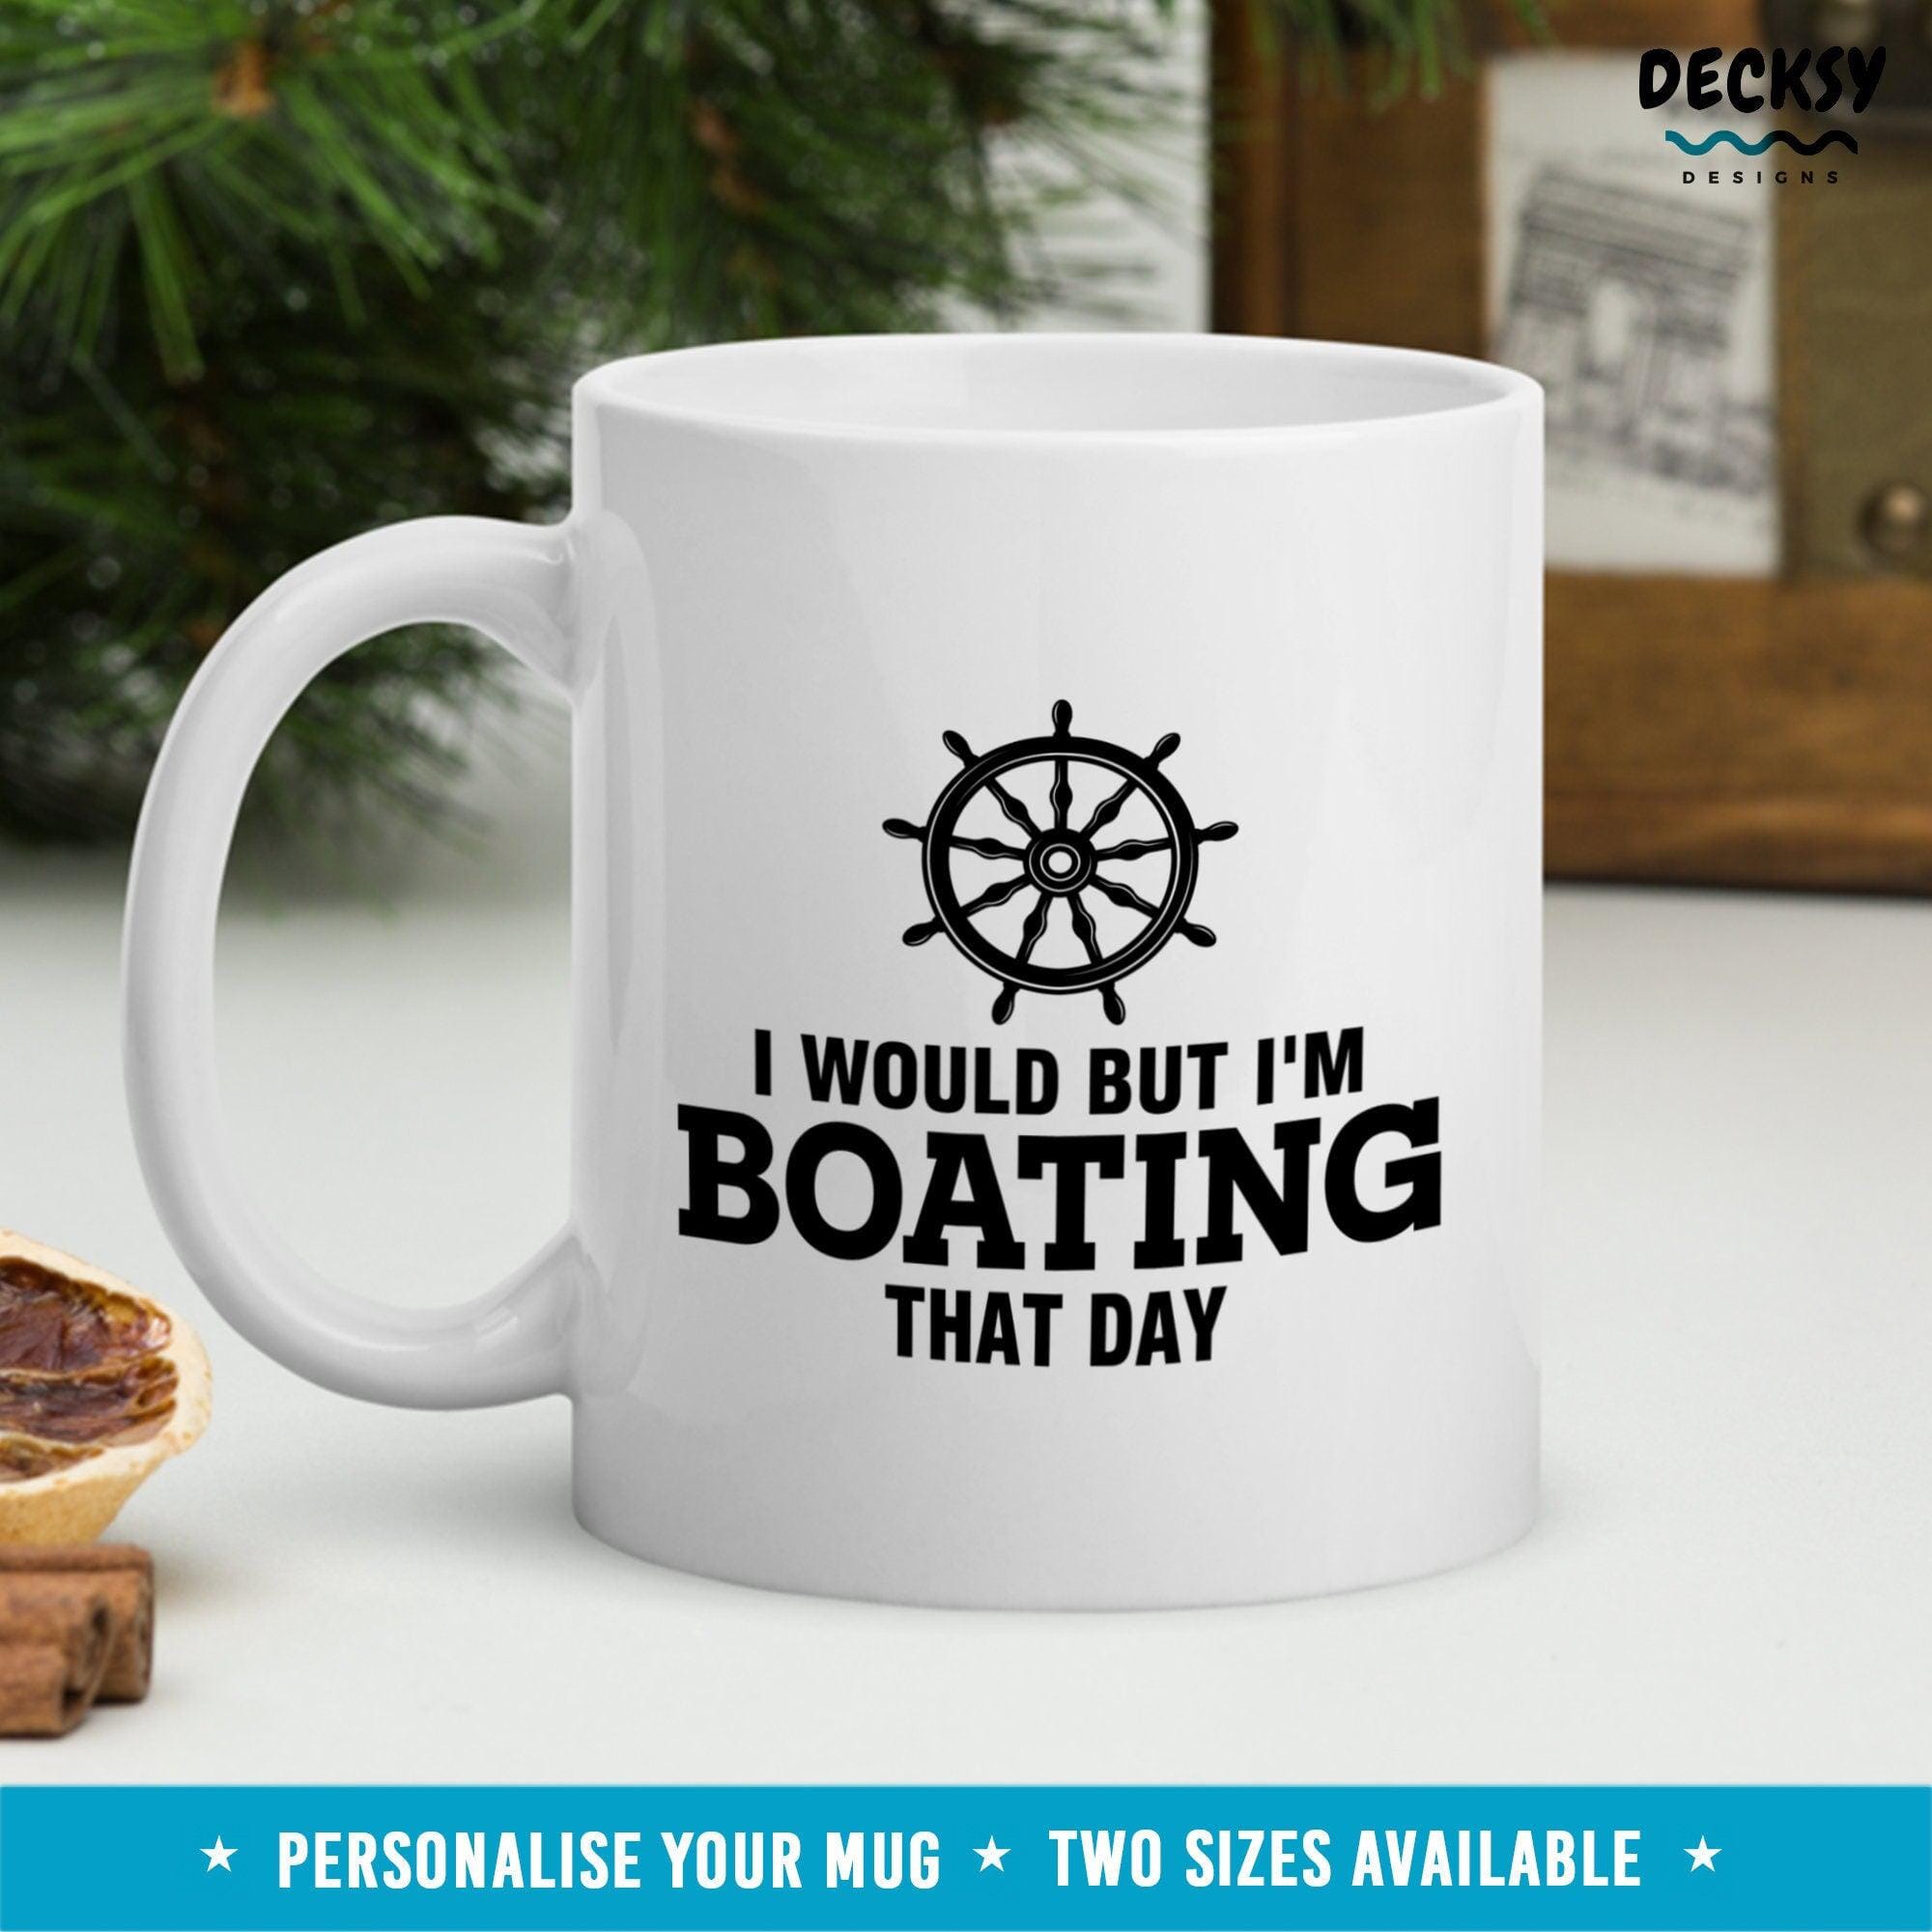 Boating Mug, Personalised Gifts For Boaters-Home & Living:Kitchen & Dining:Drink & Barware:Drinkware:Mugs-DecksyDesigns-White Mug 11 oz-NO PERSONALISATION-DecksyDesigns